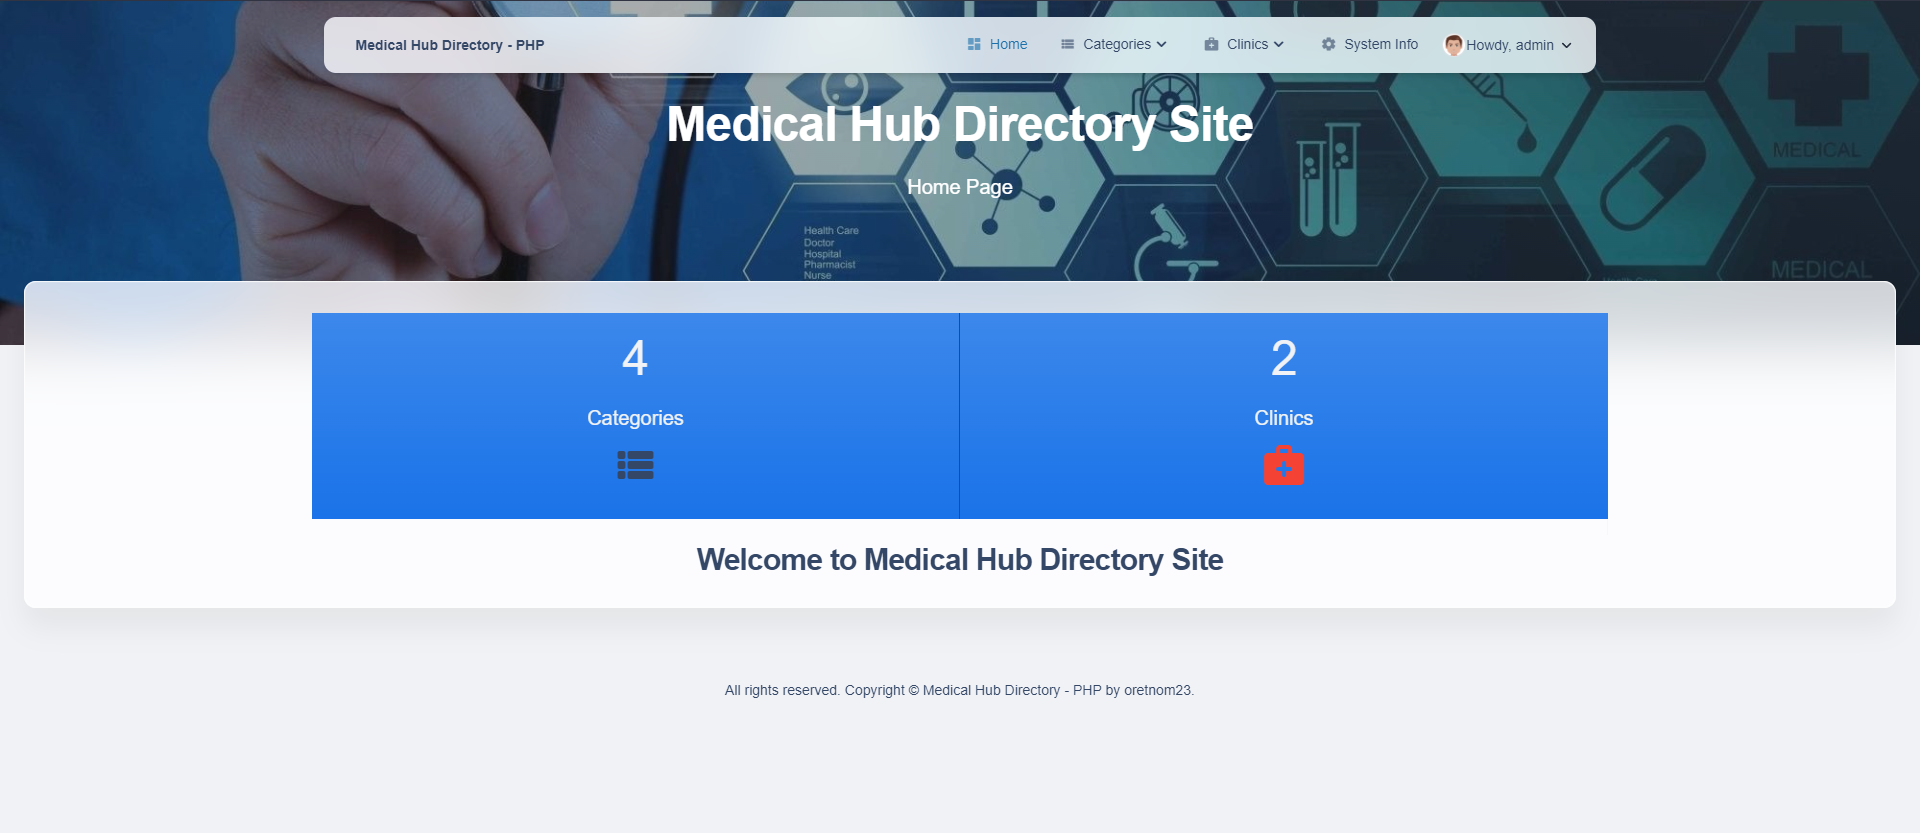 Medical Hub Directory Site